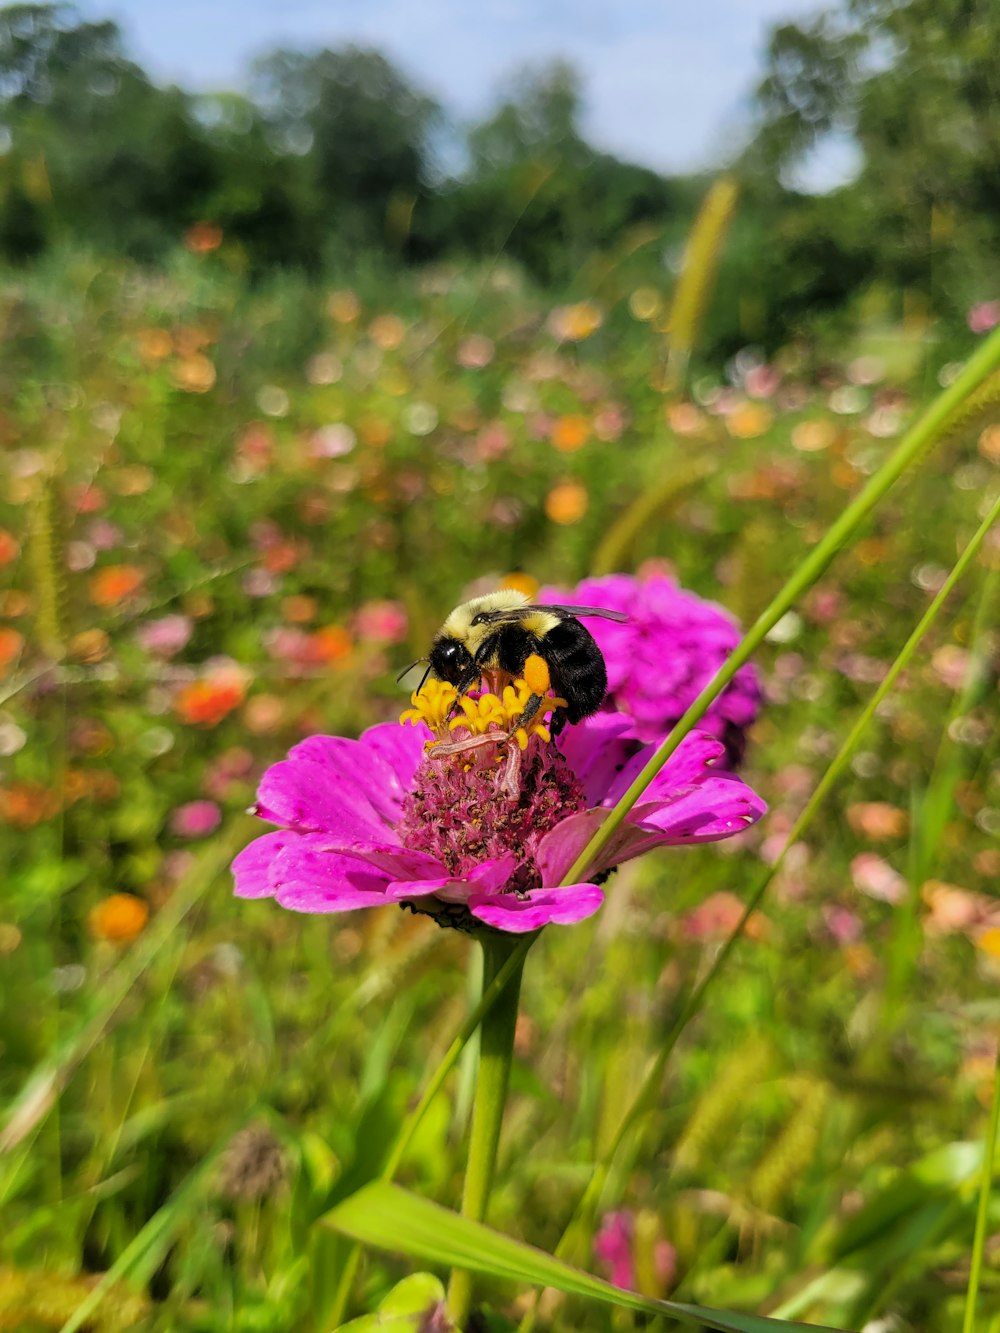 a bee sitting on a flower in a field of flowers